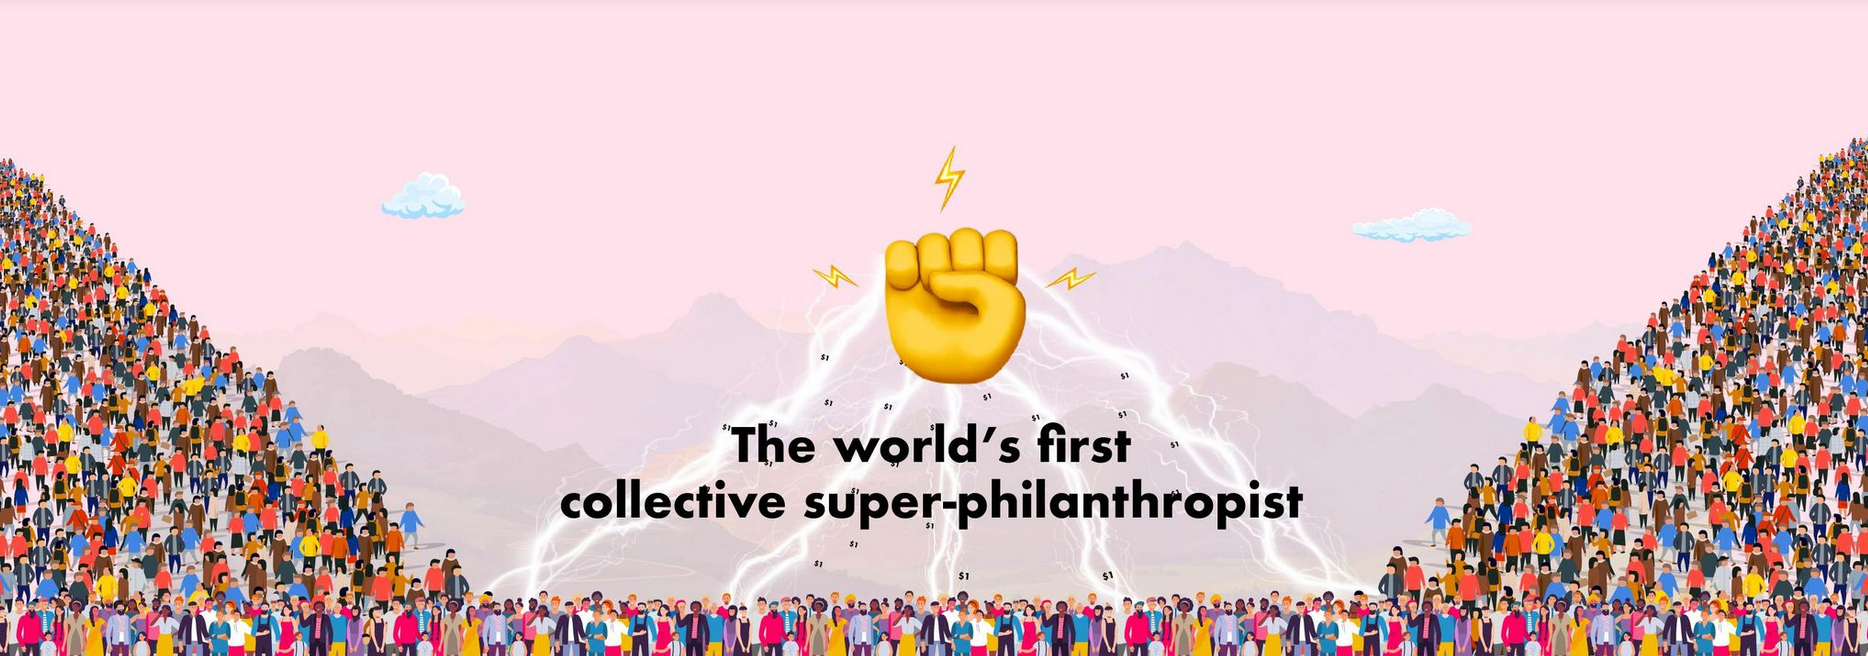 Surflogic Australia Joins the Dollar Donation Club As A Collective Philanthropist